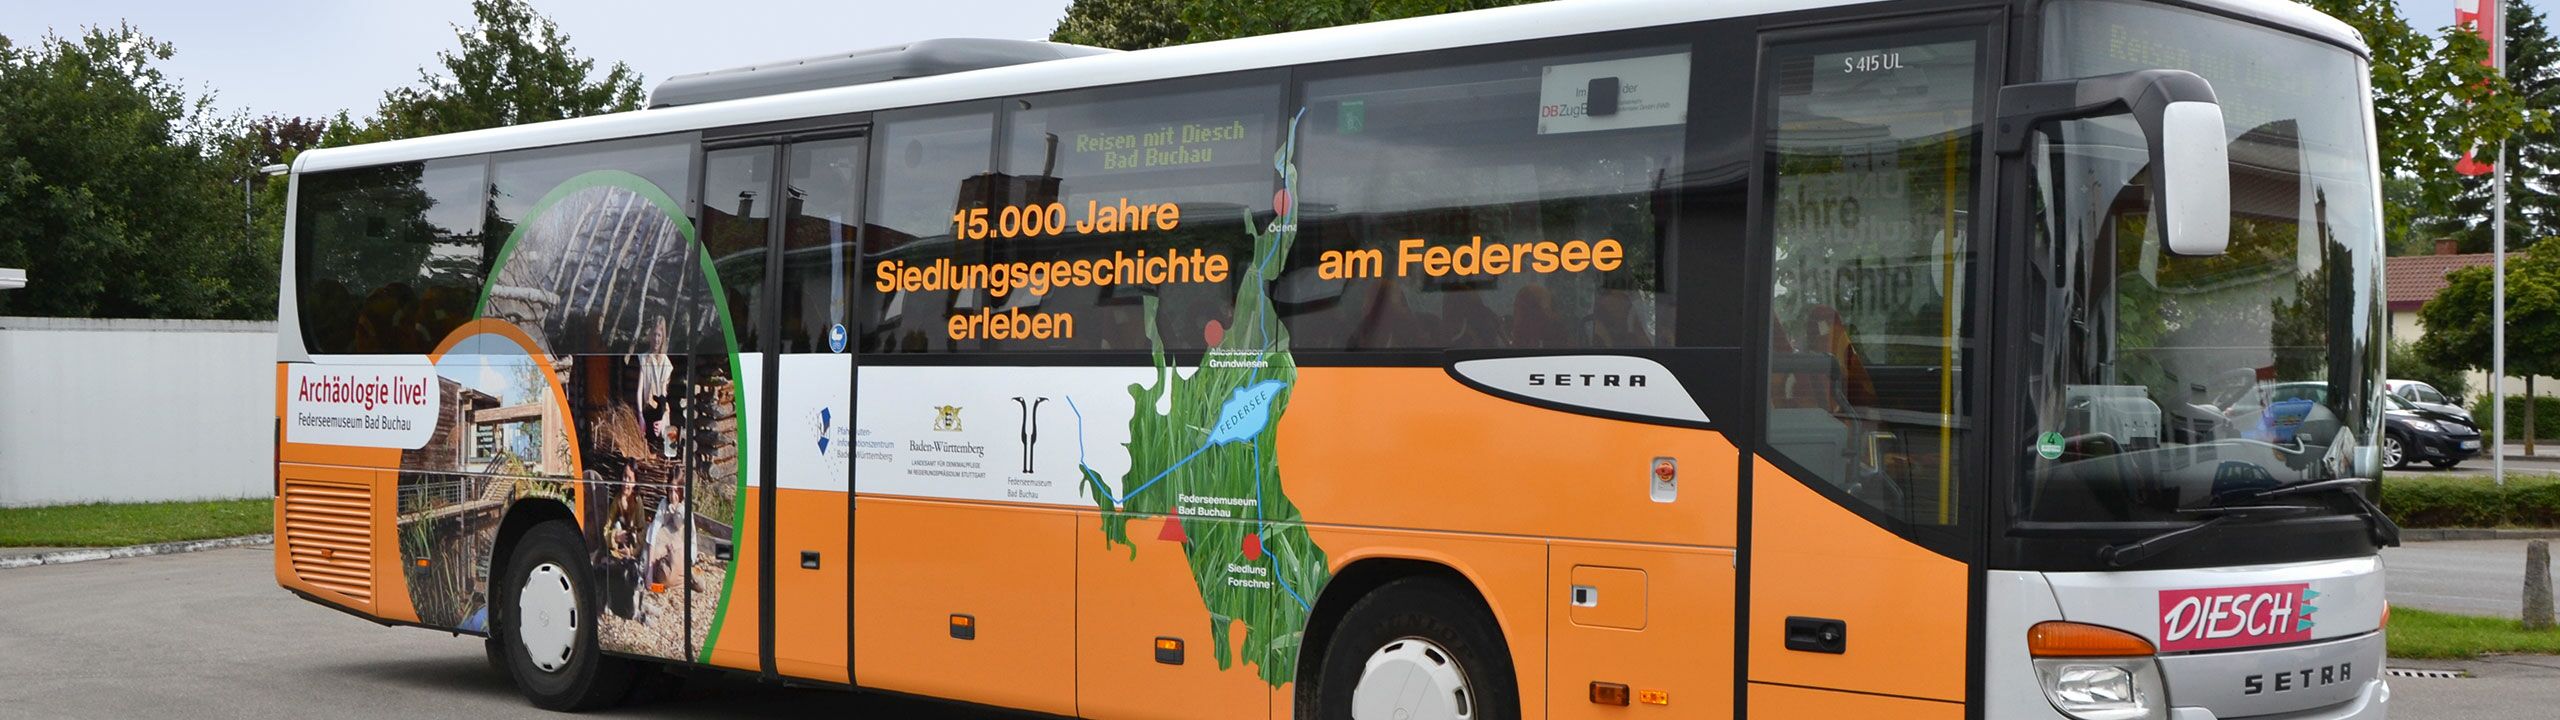 Buswerbung in Sachen Unesco Welterbe